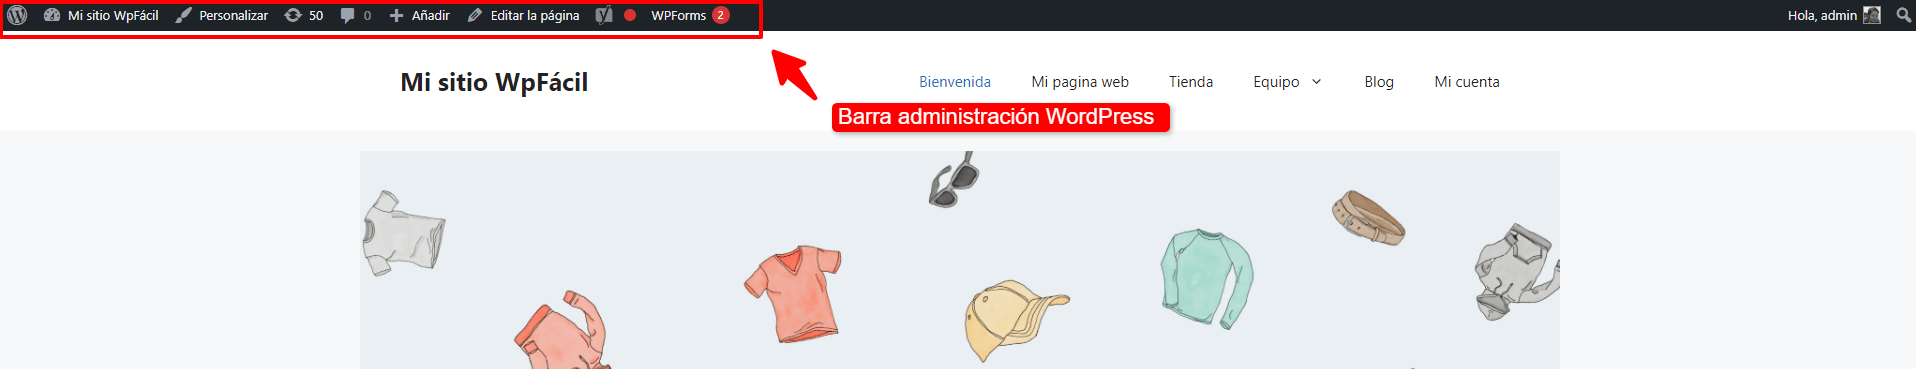 Barra administración WordPress